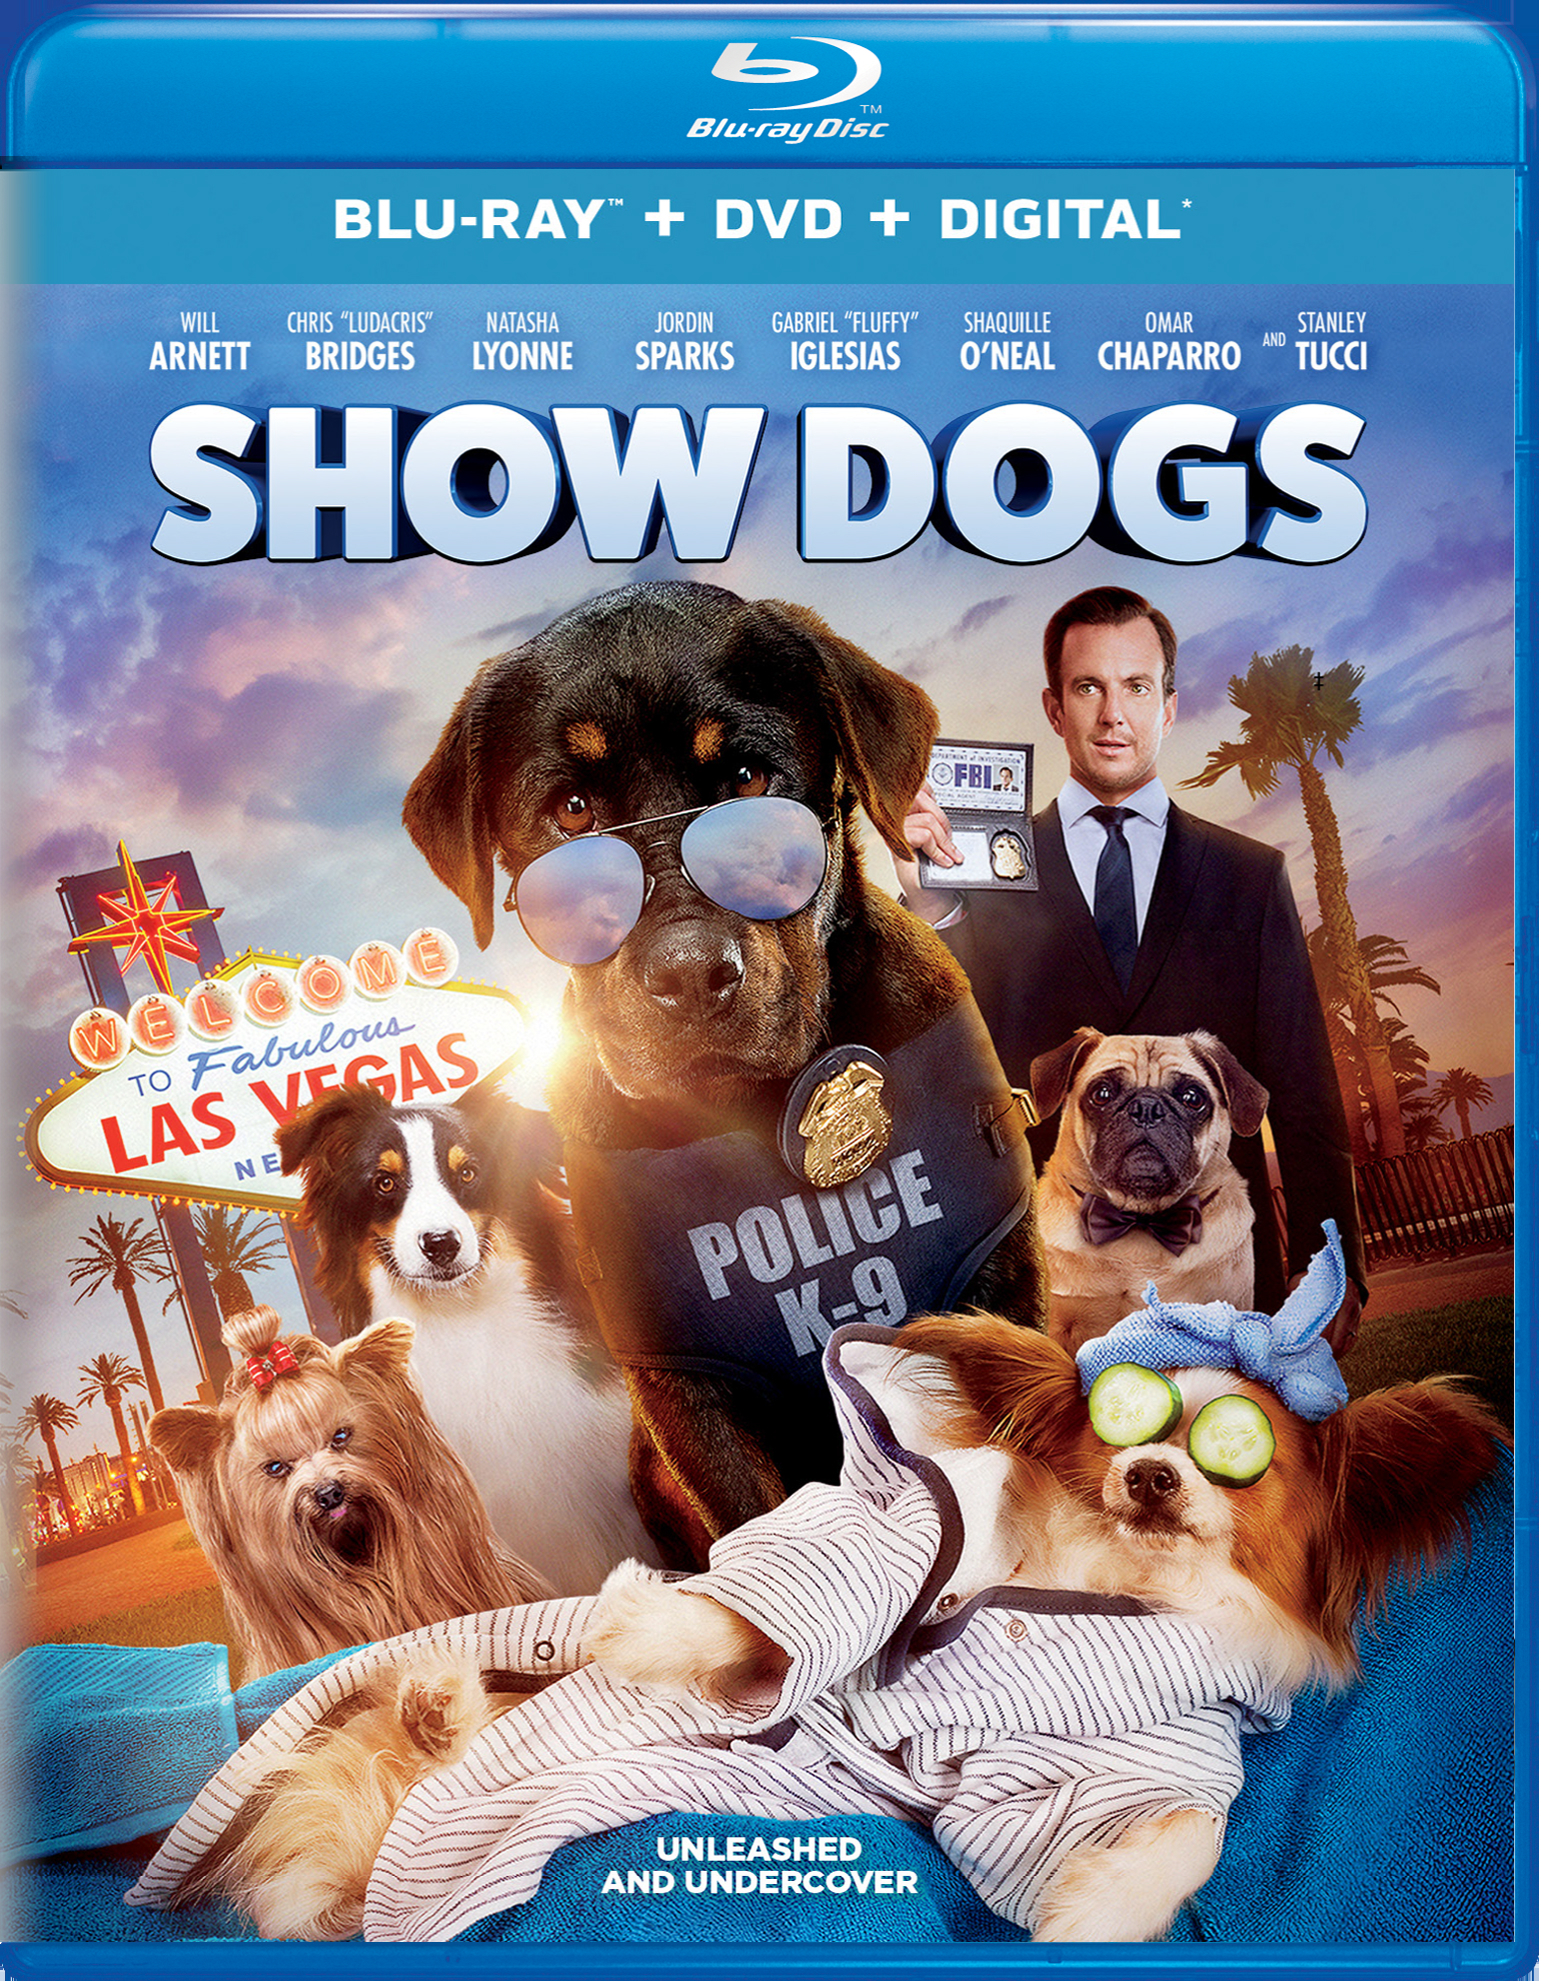 Show Dogs (DVD + Digital) - Blu-ray [ 2018 ]  - Animation Movies On Blu-ray - Movies On GRUV